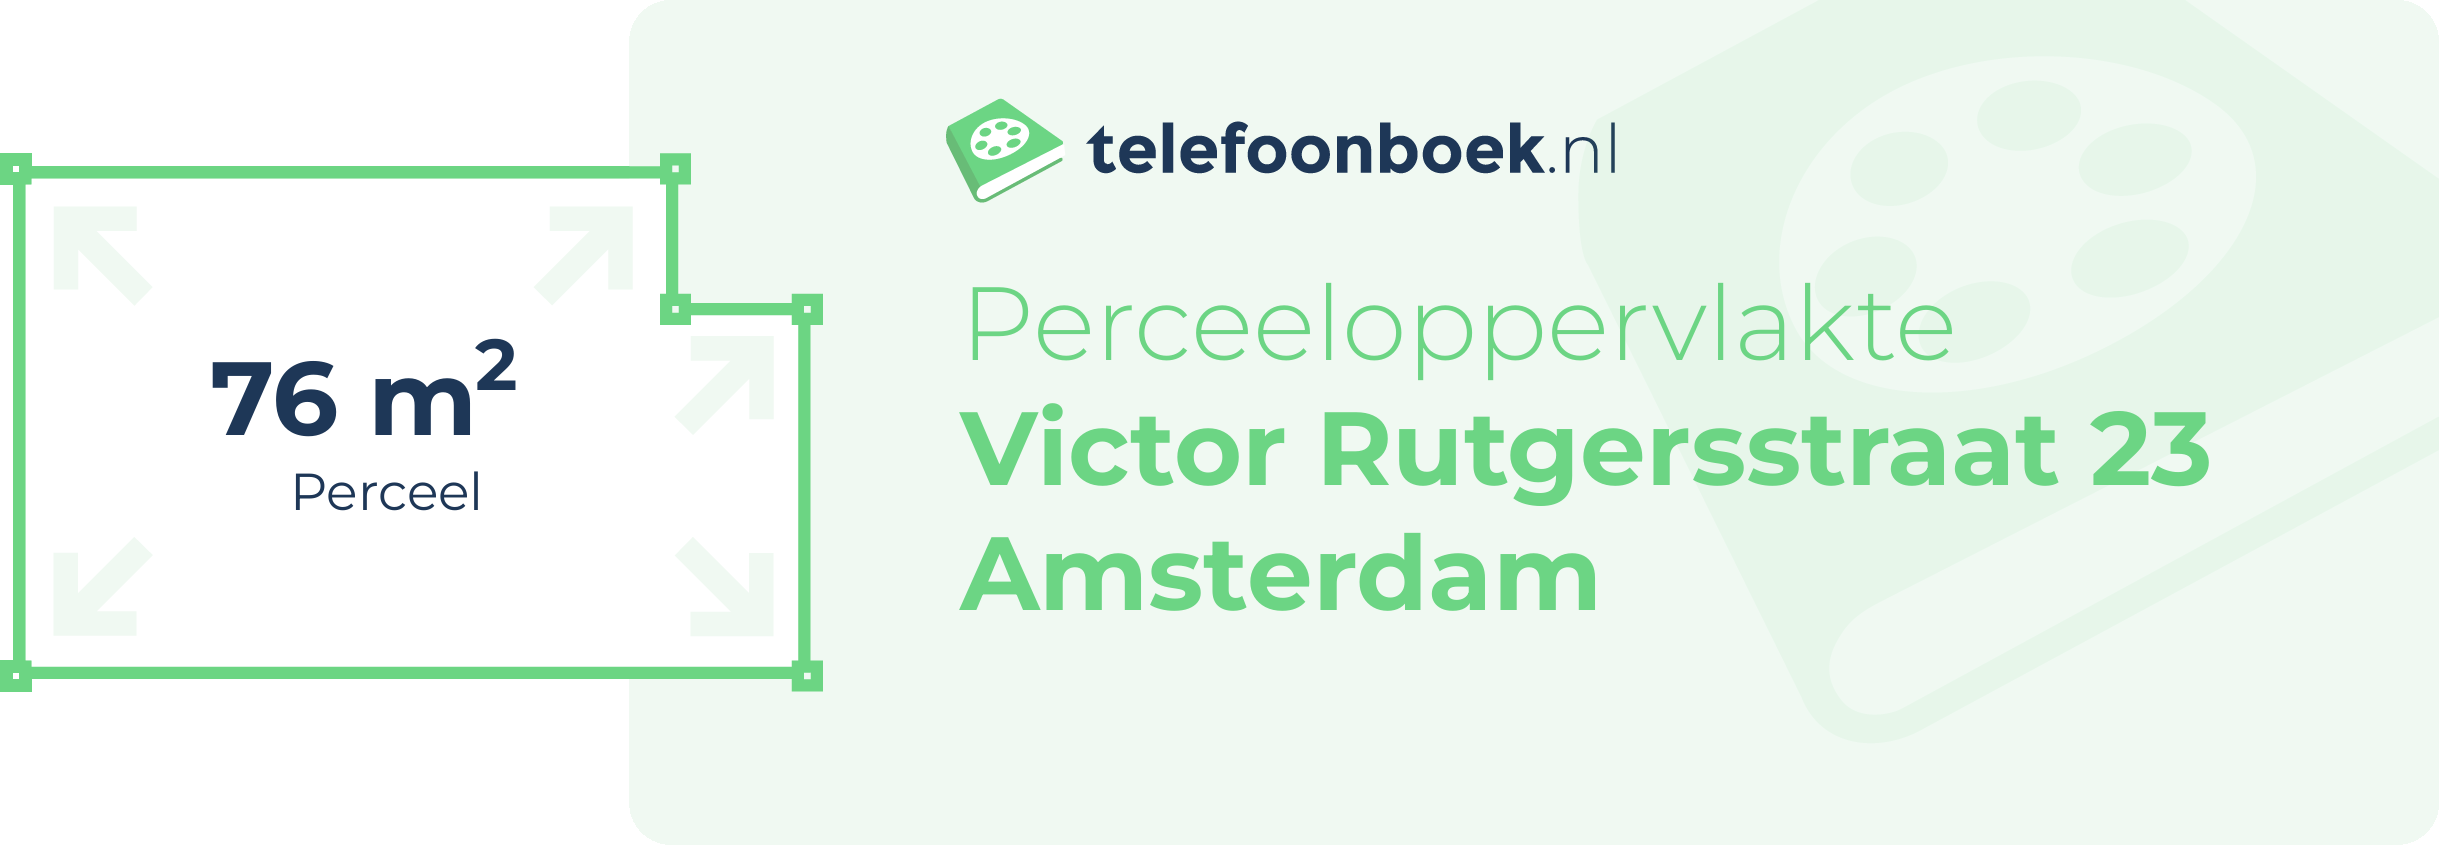 Perceeloppervlakte Victor Rutgersstraat 23 Amsterdam